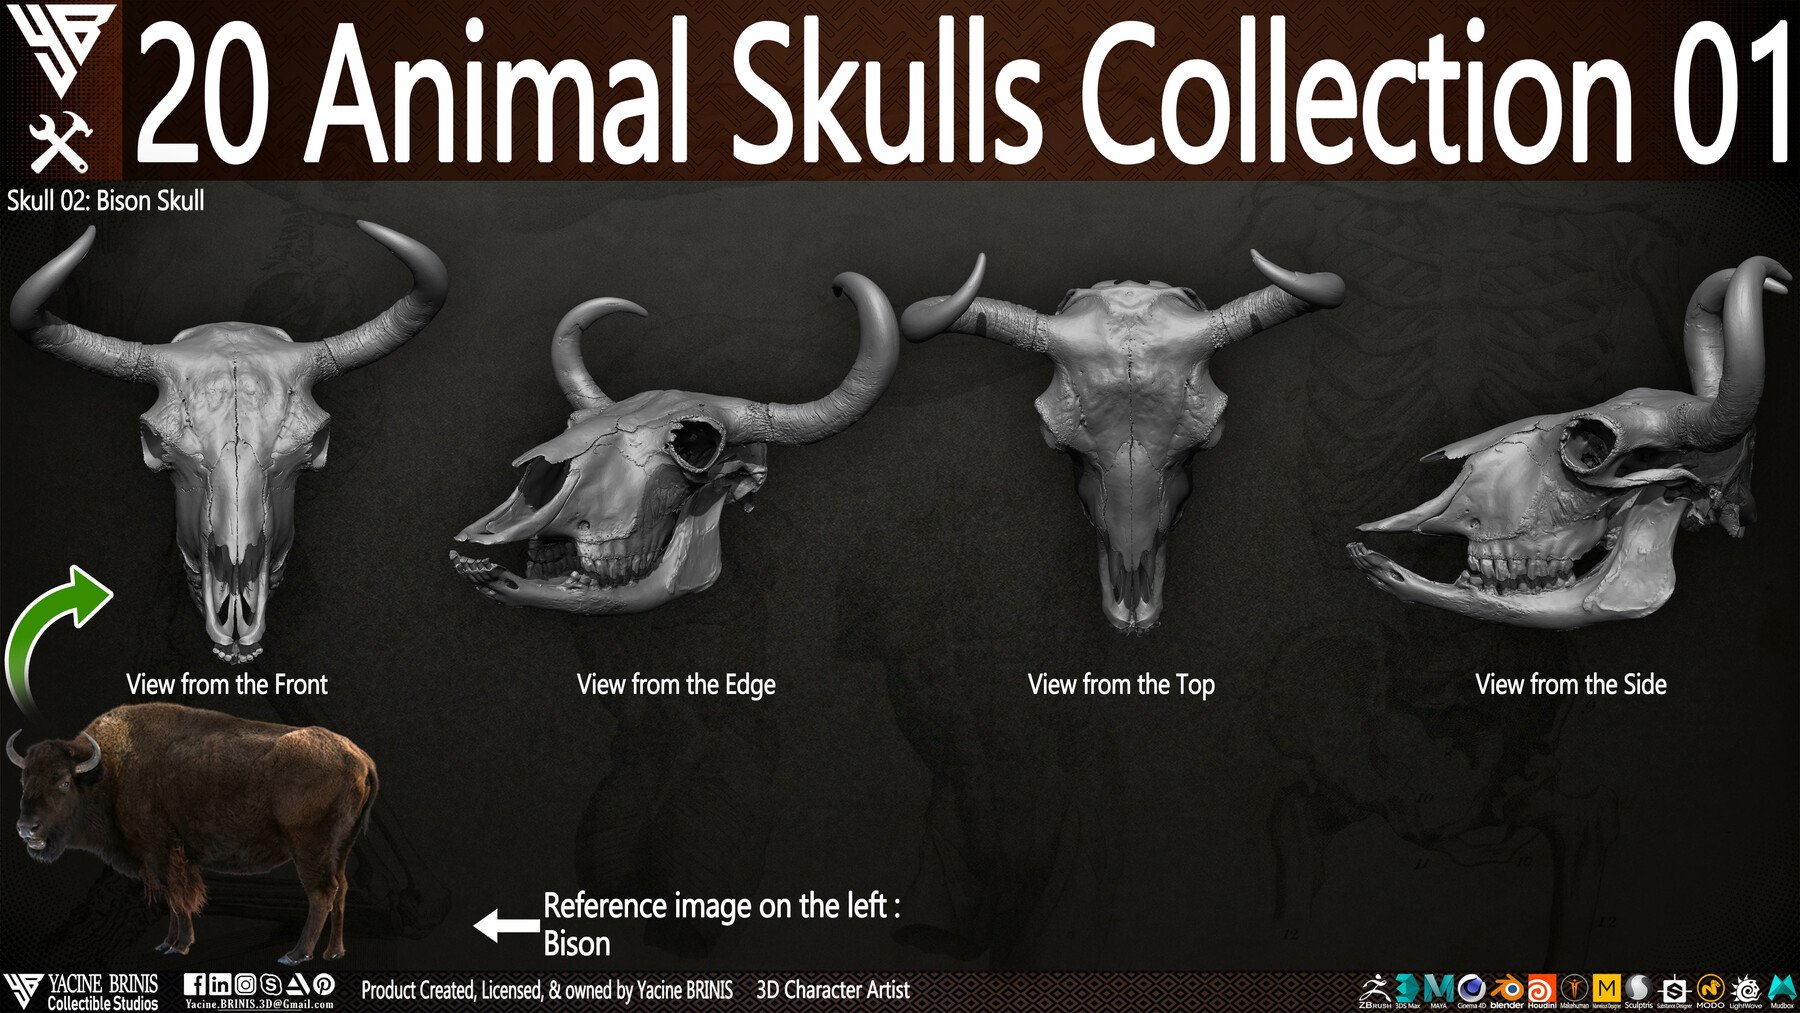 ArtStation - 20 Animal Skulls Collection 01 | Resources